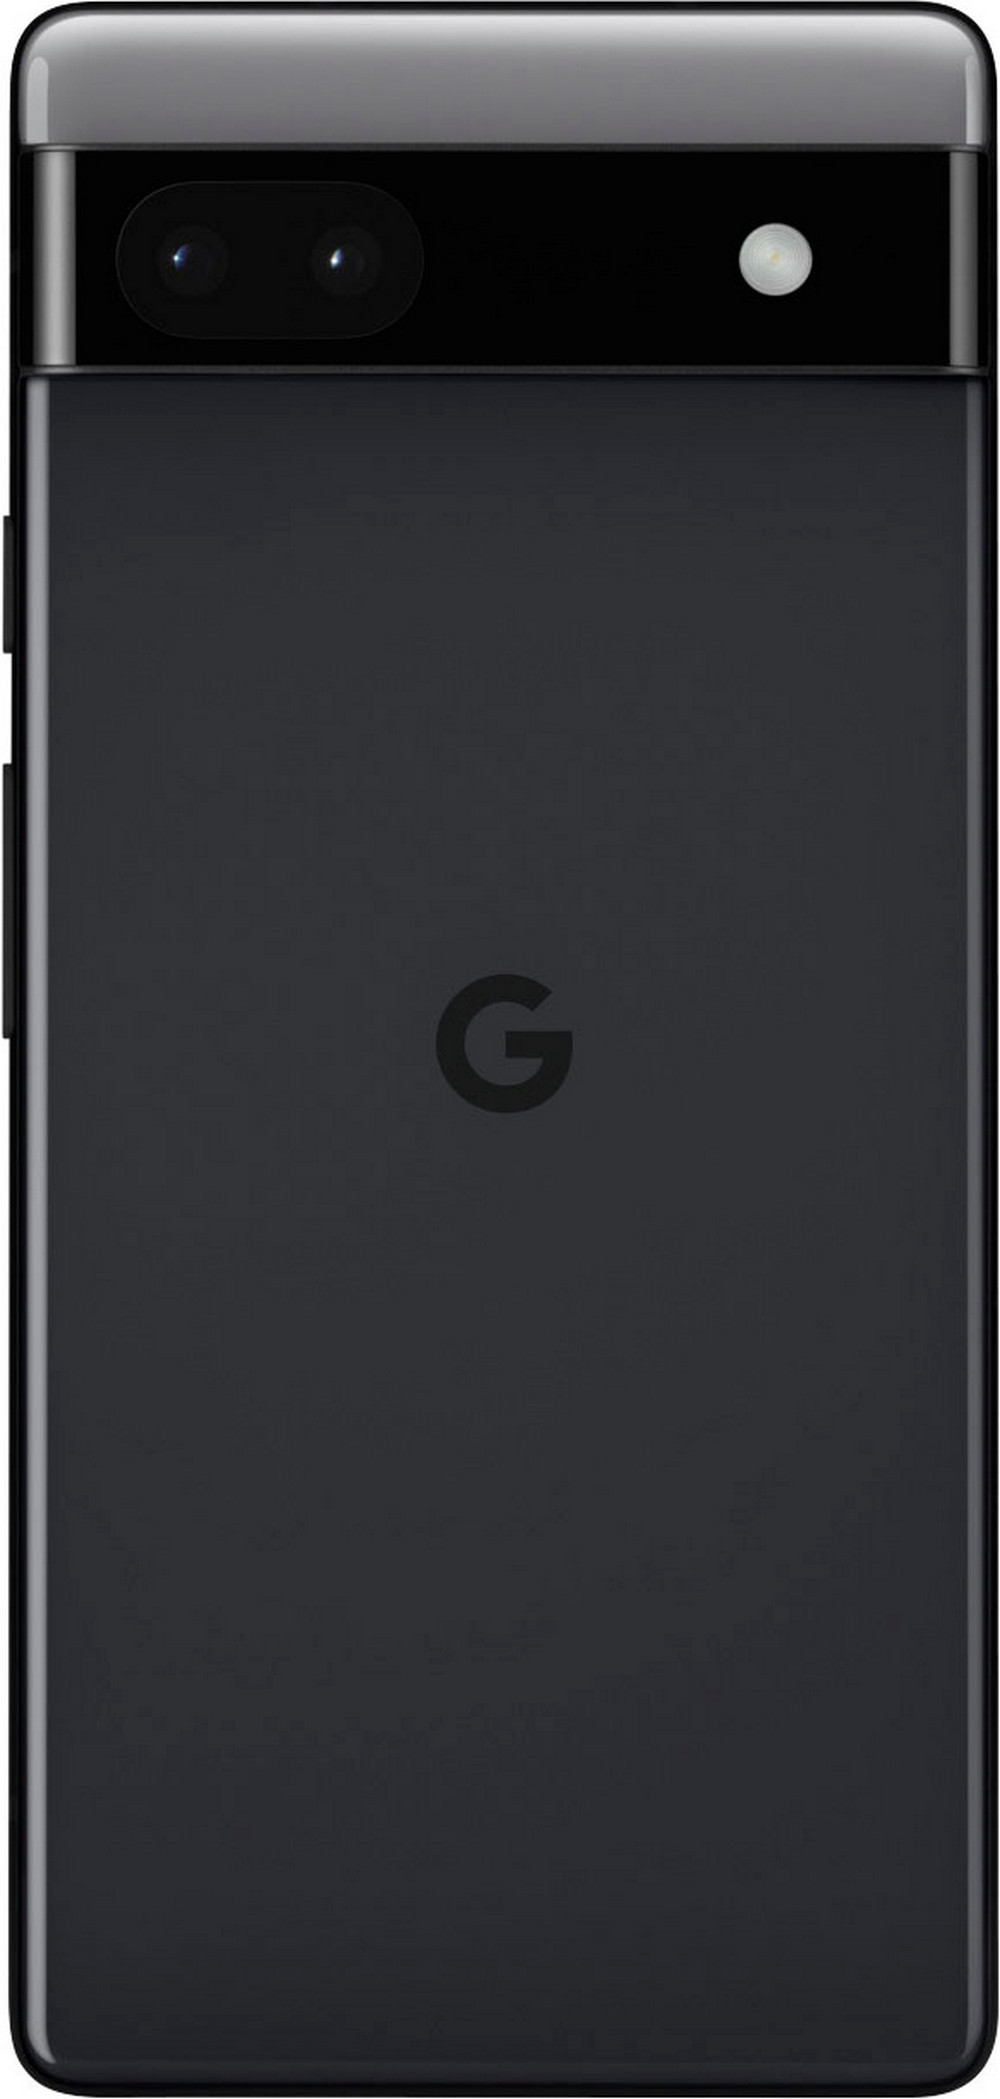 Google Pixel 6a Unknown Carrier | Black, 128GB, 6.1 in Screen | Grade B- | GX7AS